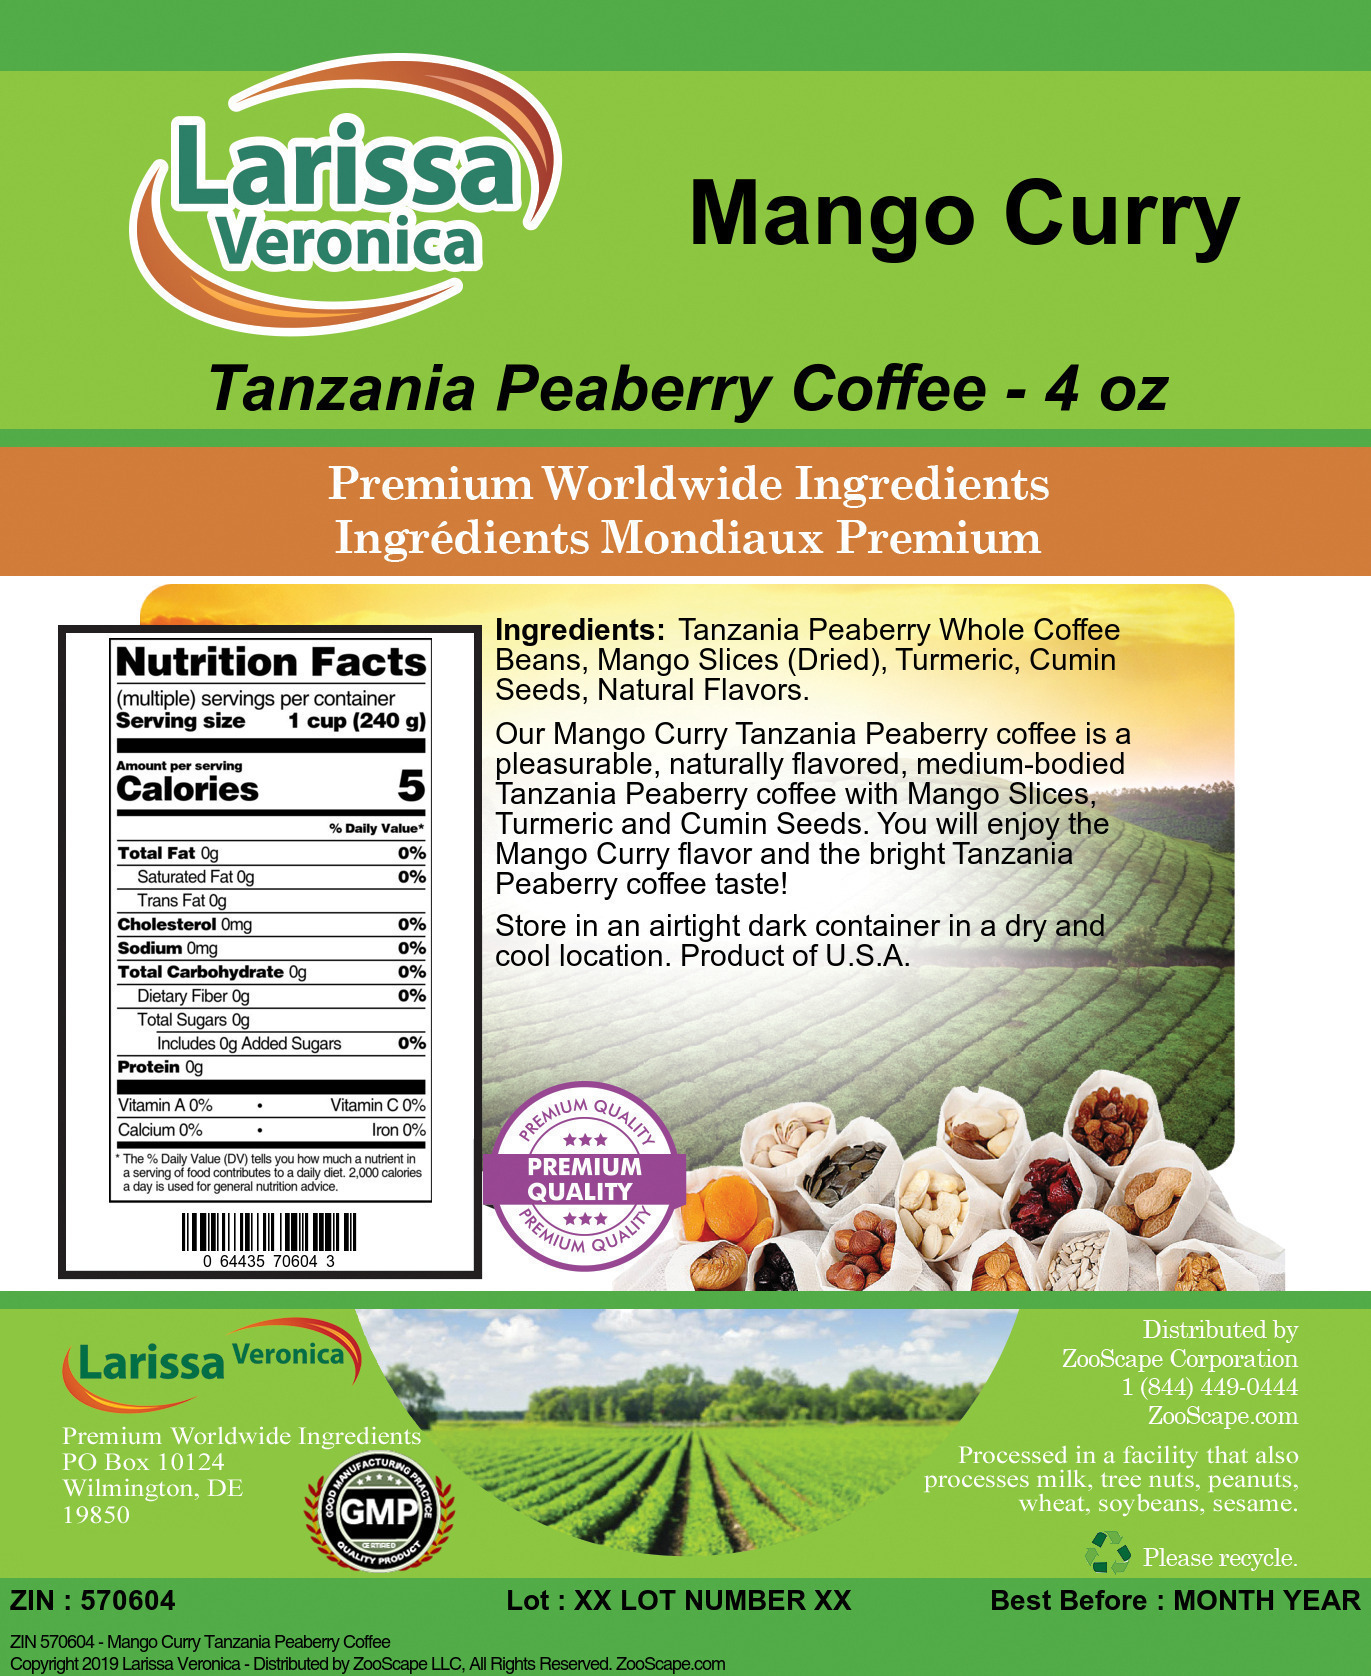 Mango Curry Tanzania Peaberry Coffee - Label